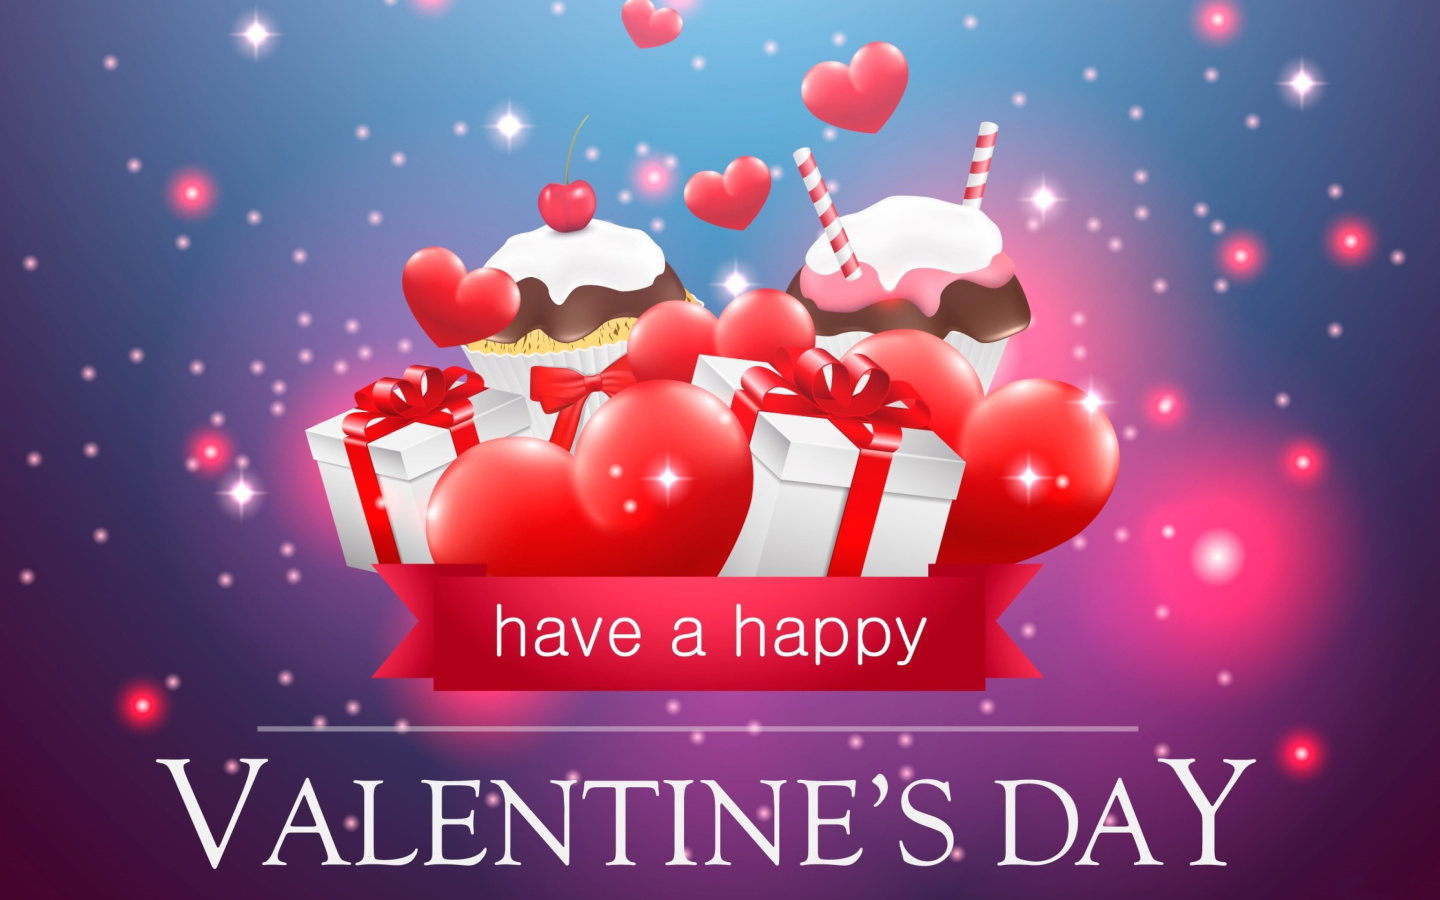 Happy Valentines Day wallpaper 1440x900